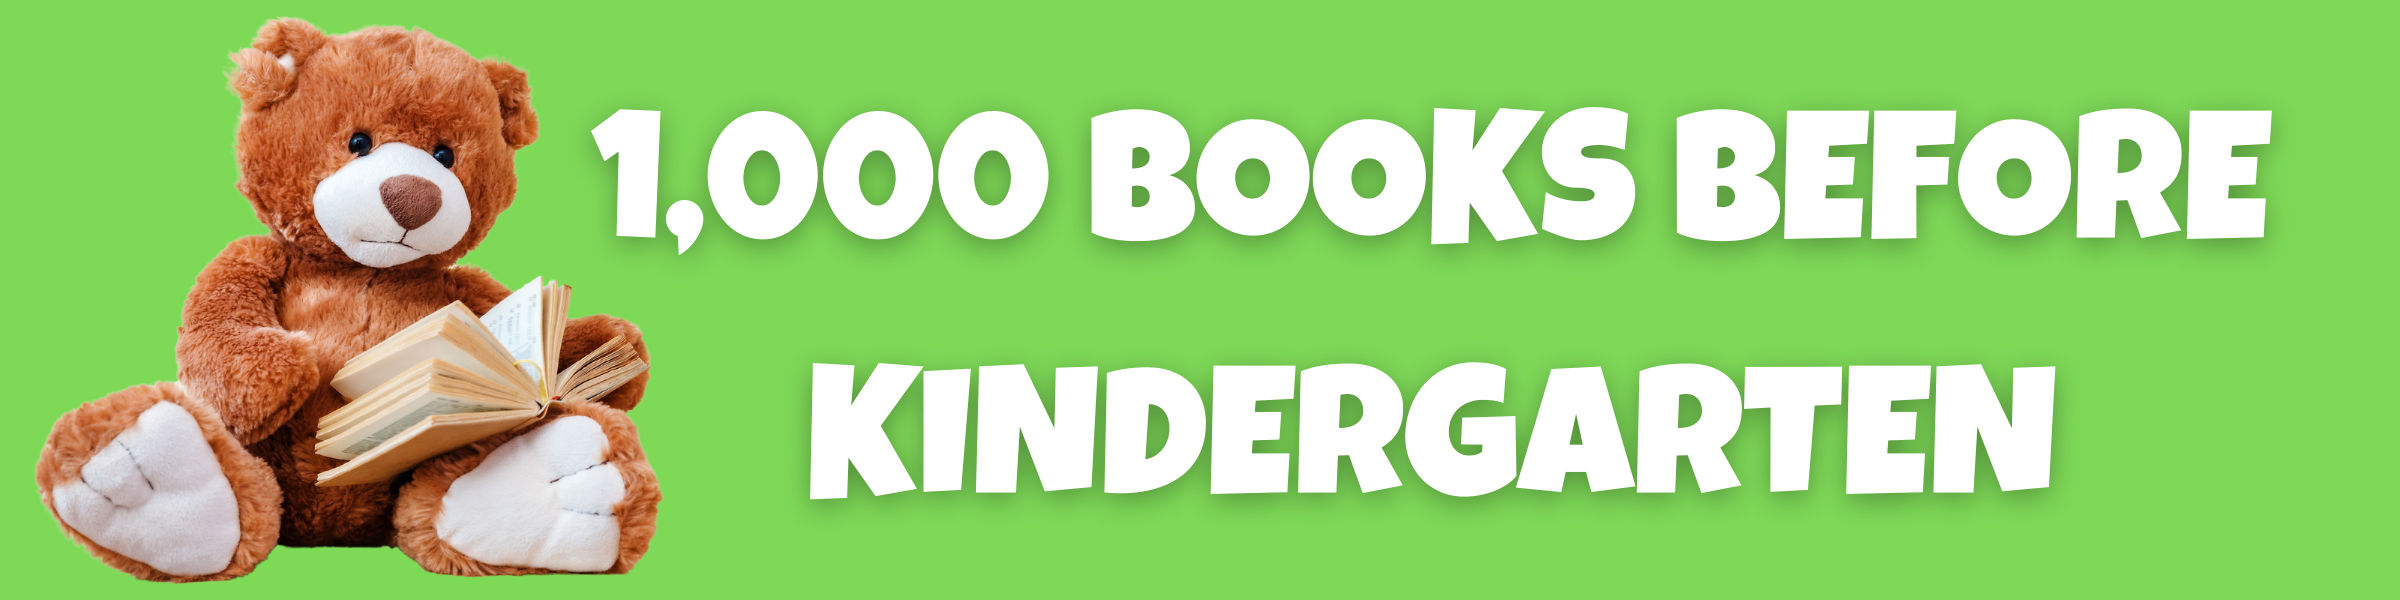 1000 Books Before Kindergarten Header